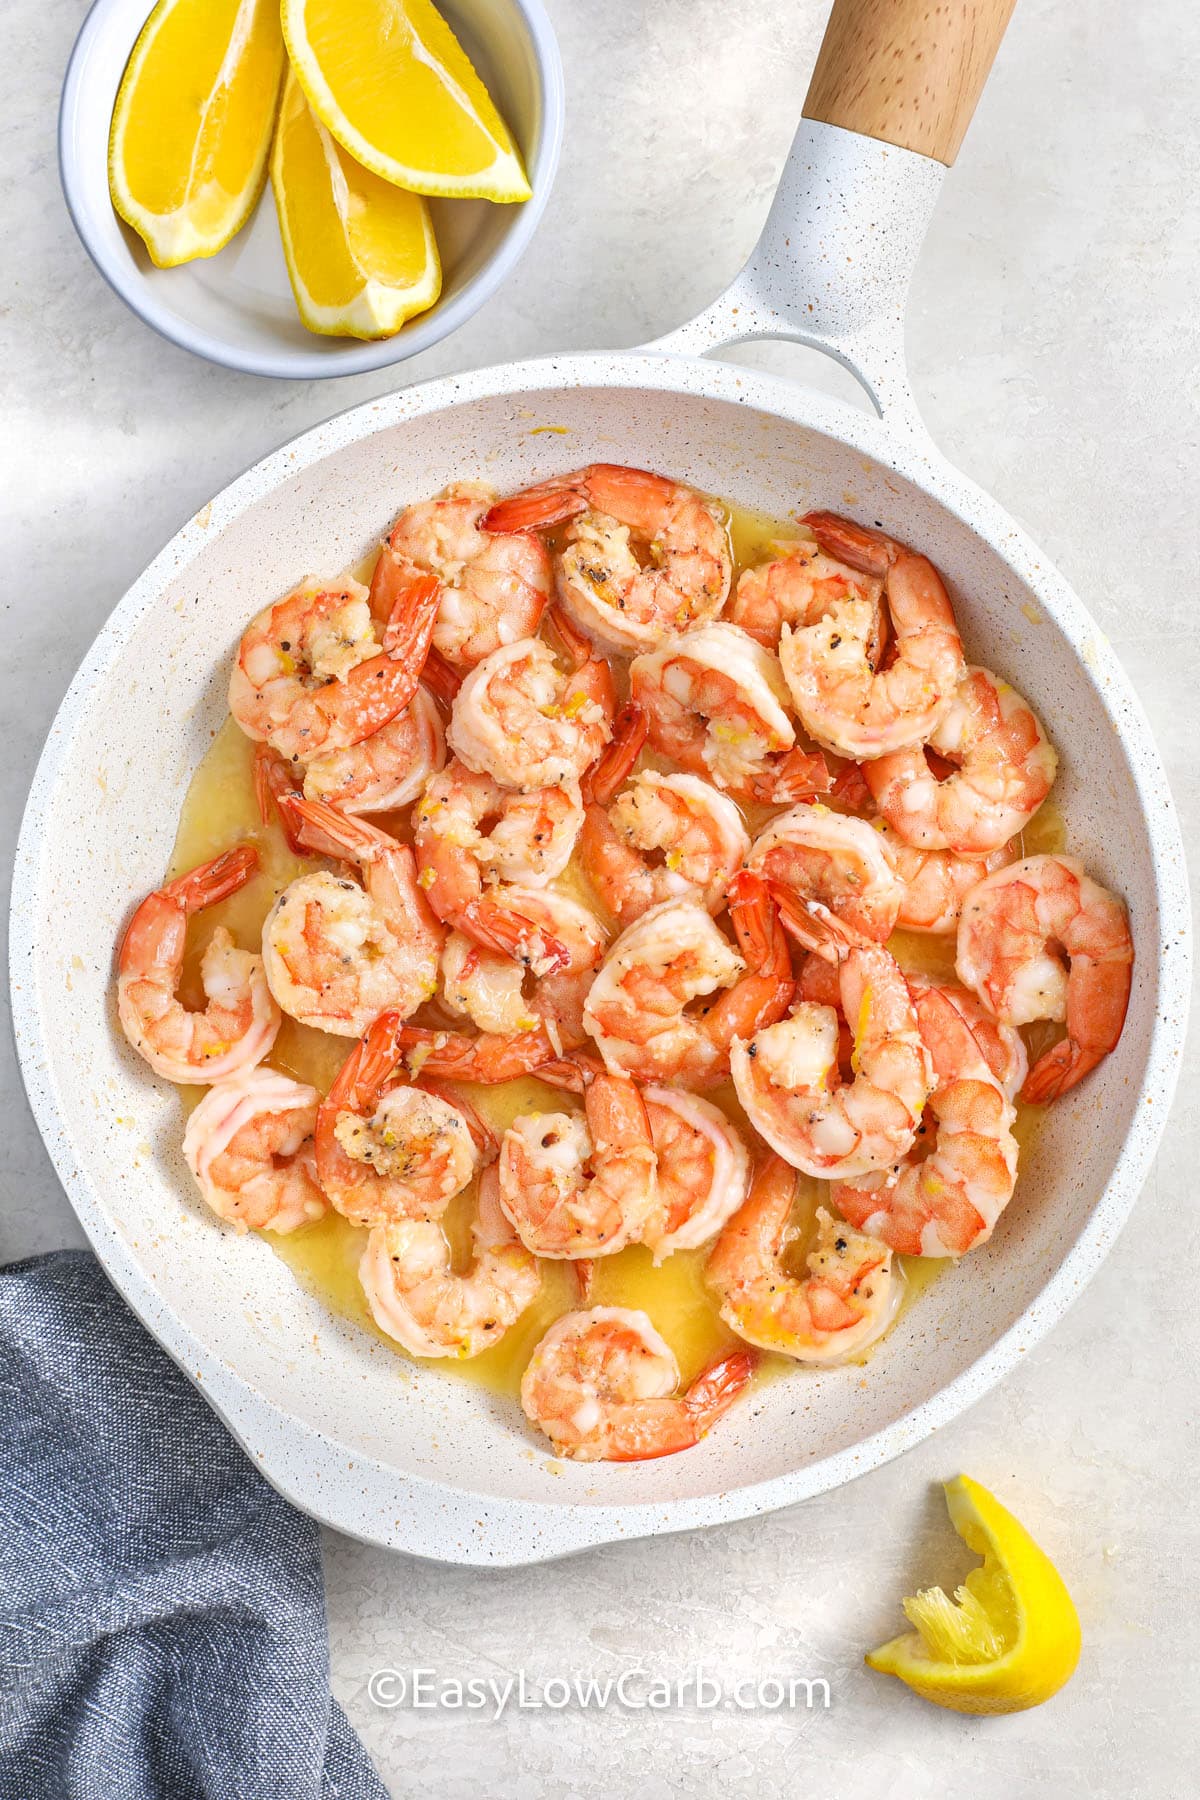 cooking shrimp to make Lemon Garlic Shrimp